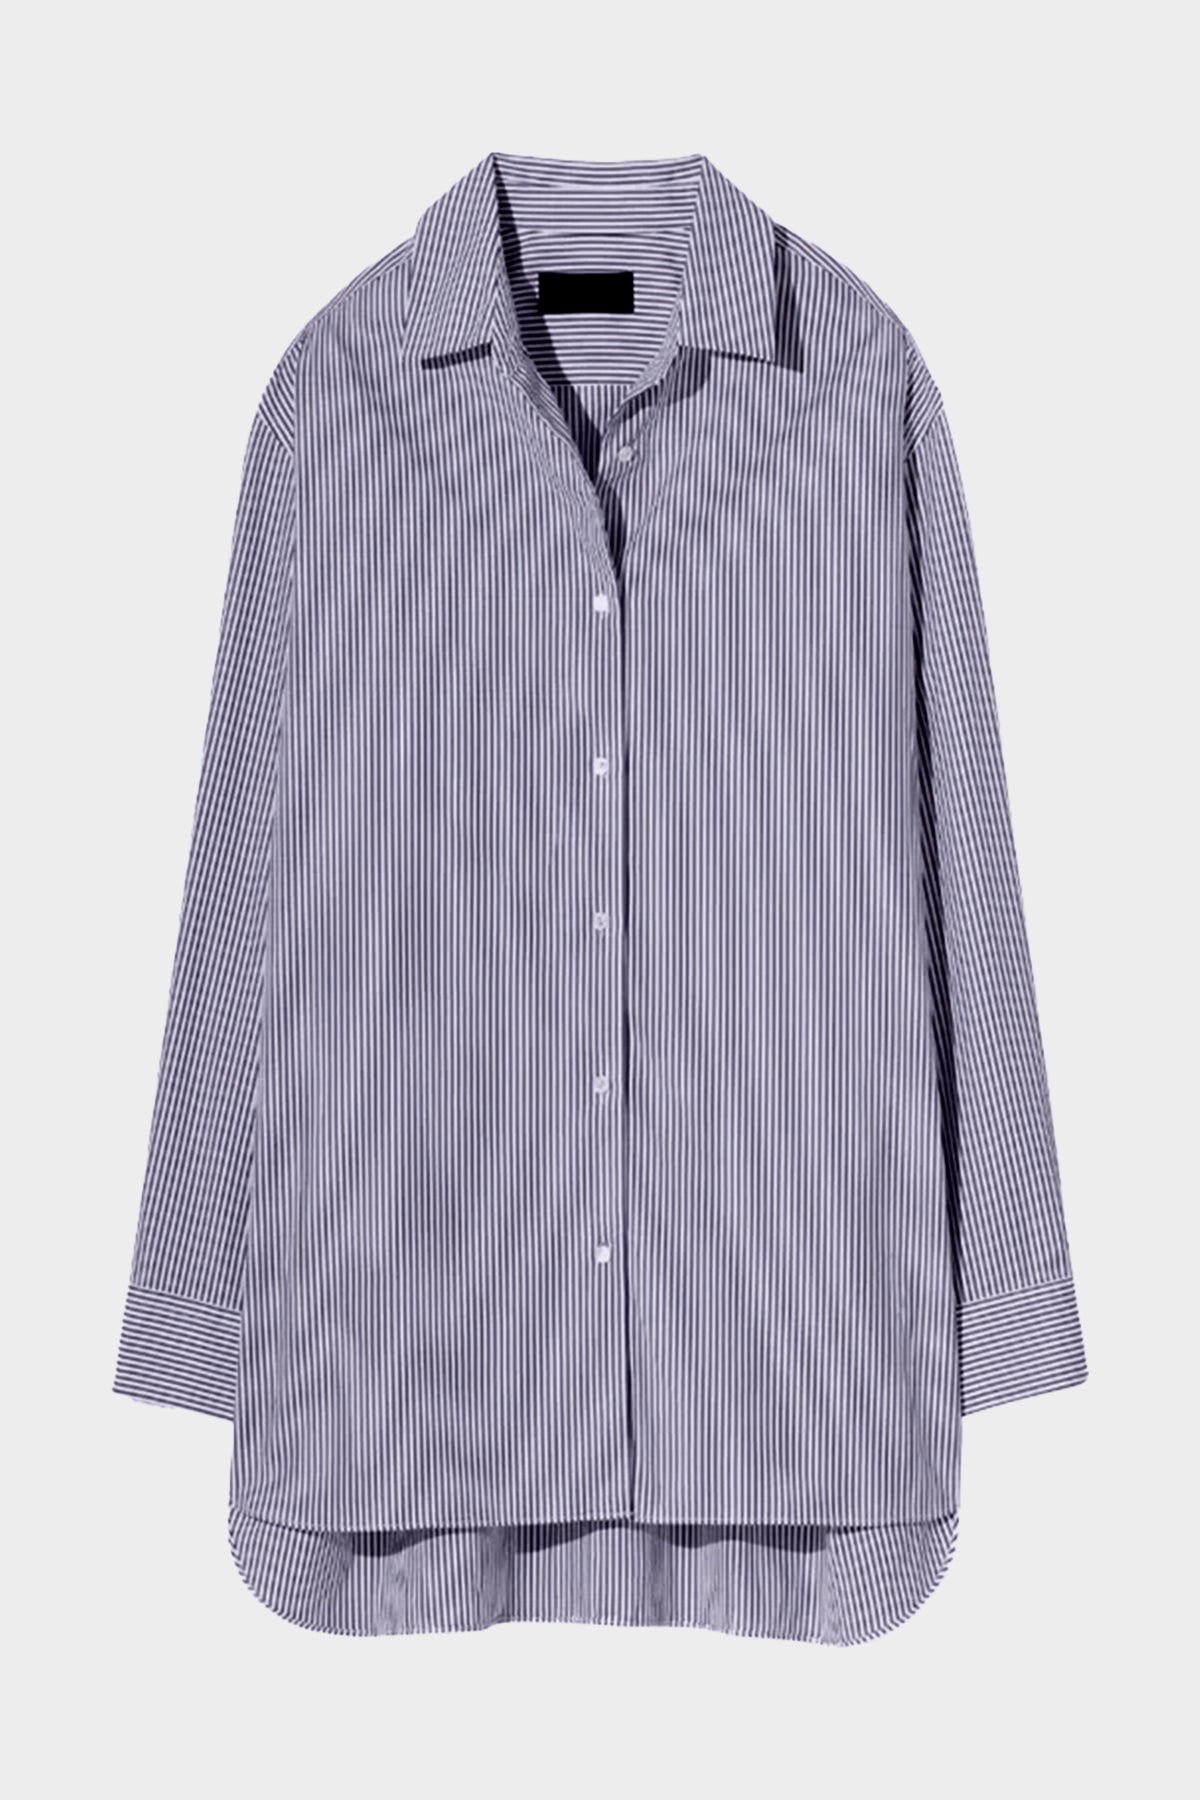 Yorke Shirt in Navy White Stripe - shop-olivia.com